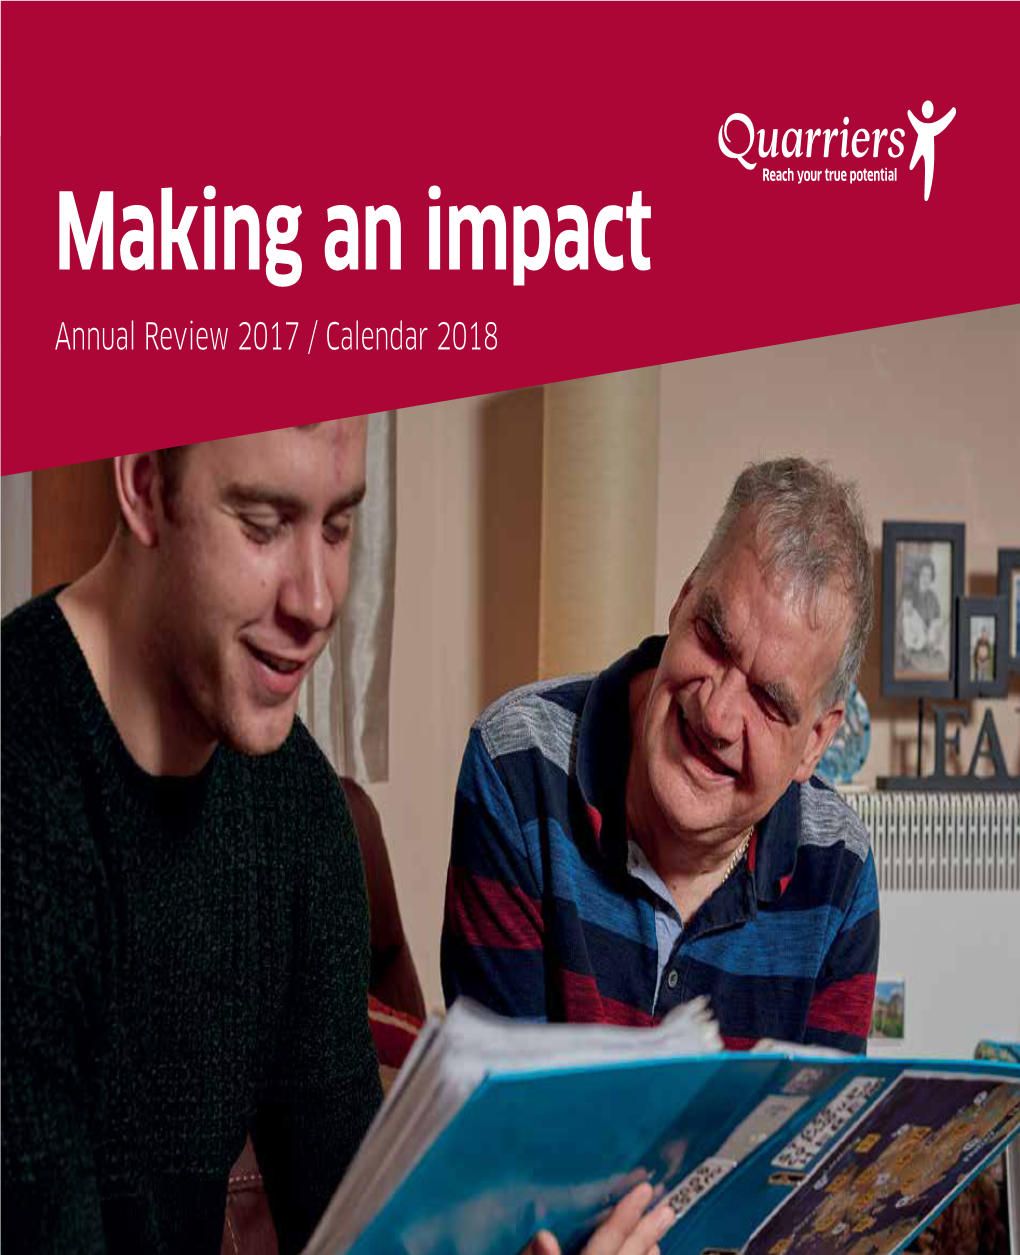 Making an Impact Annual Review 2017 / Calendar 2018 Quarriers in 2017 - Making an Impact